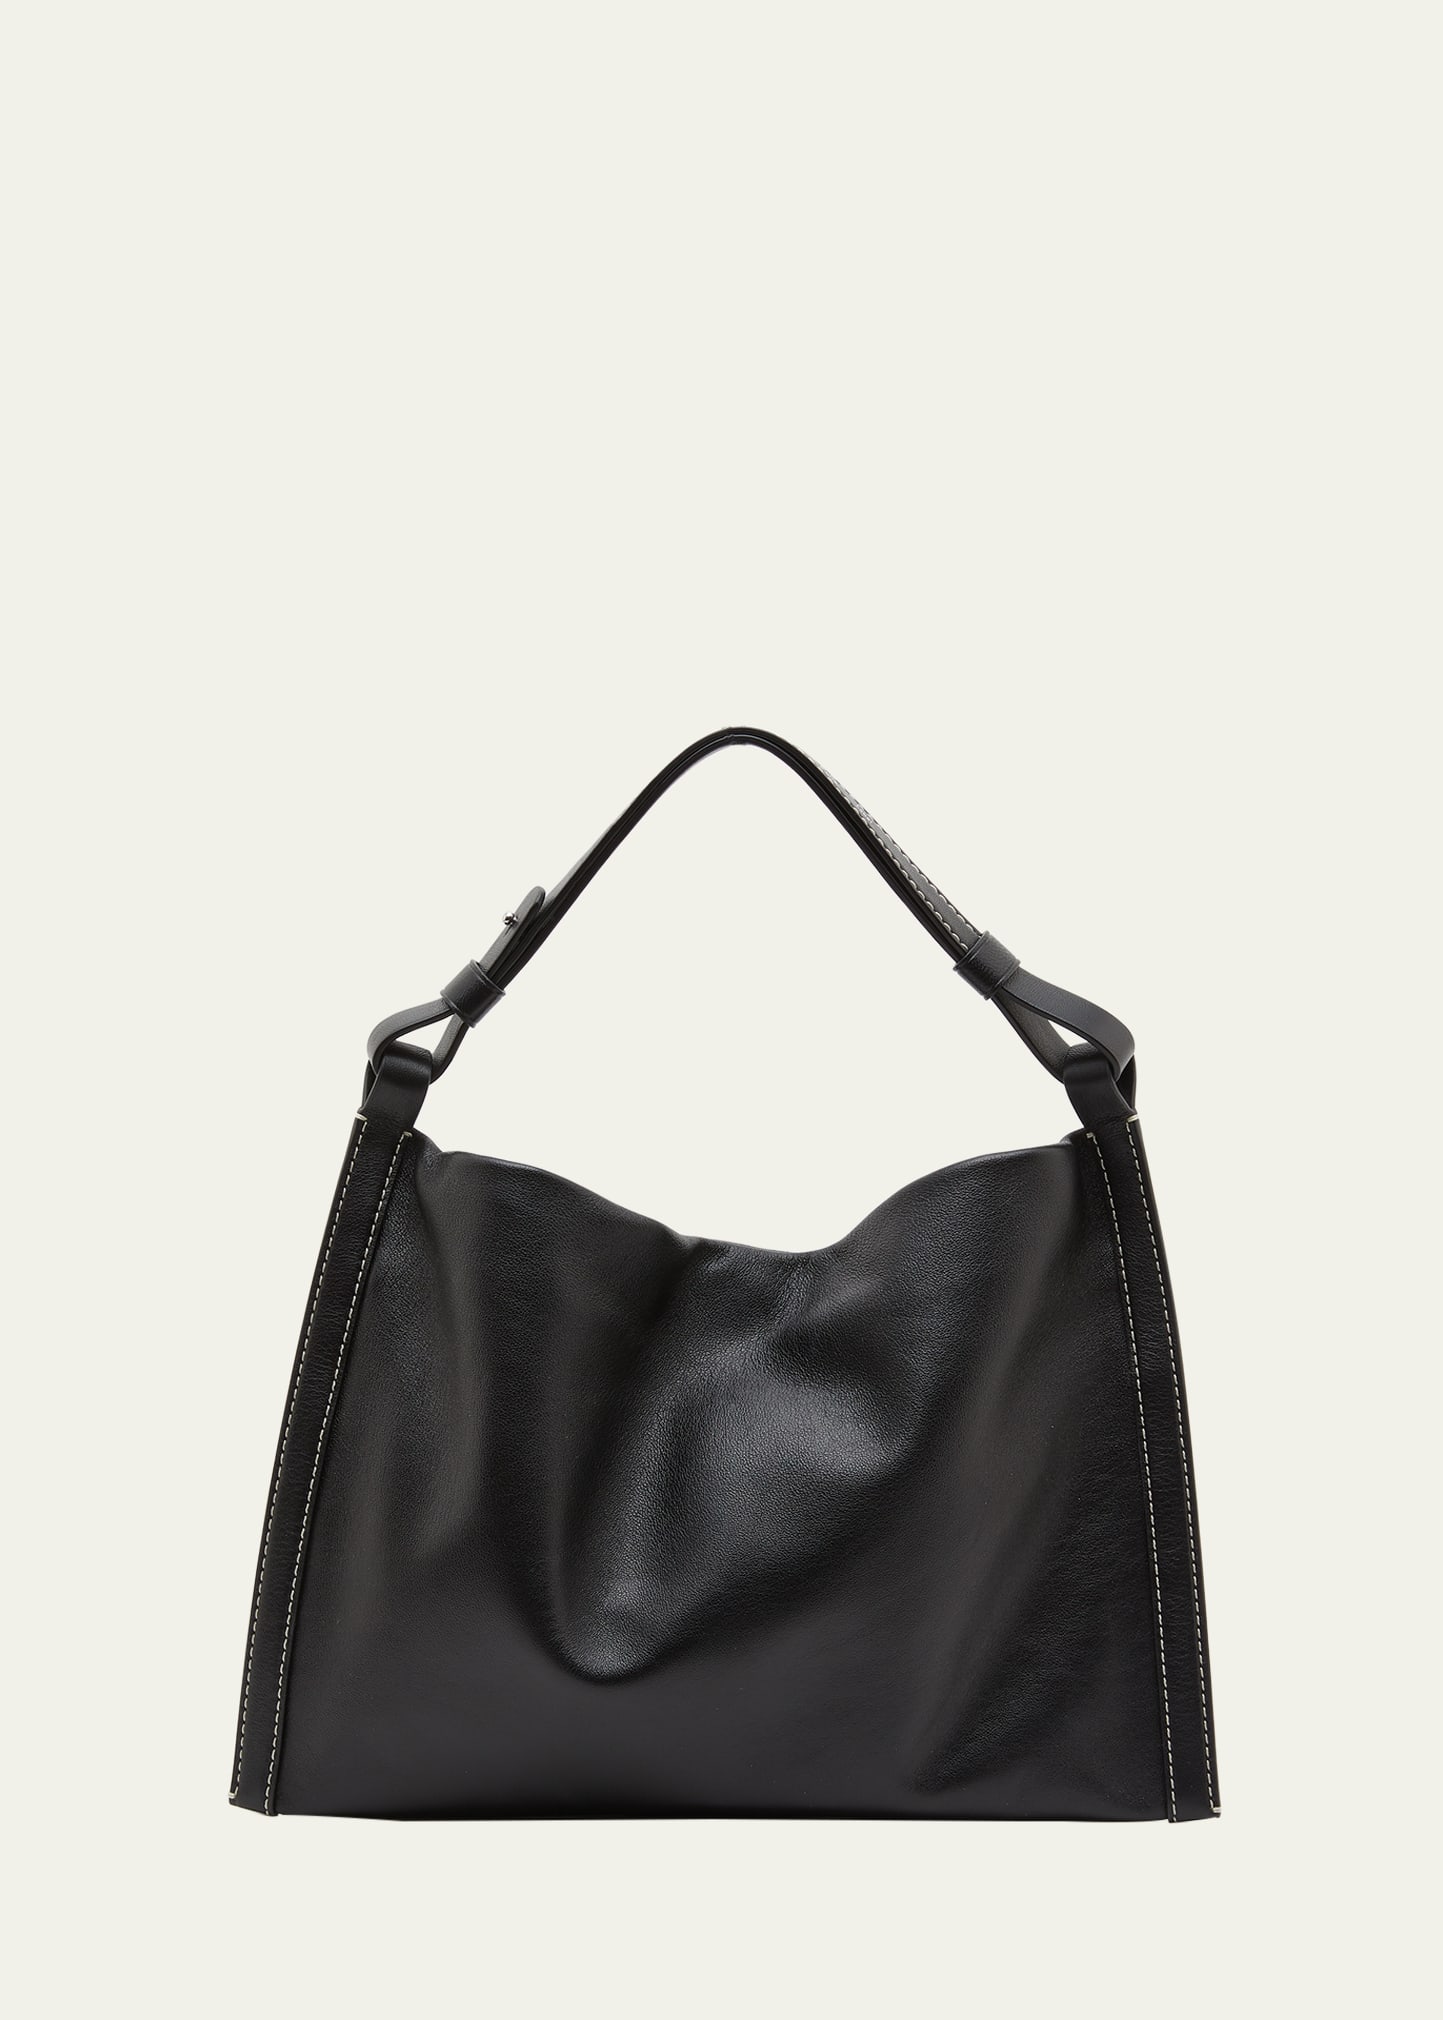 Proenza Schouler White Label Minetta Leather Shoulder Bag In 001 Black